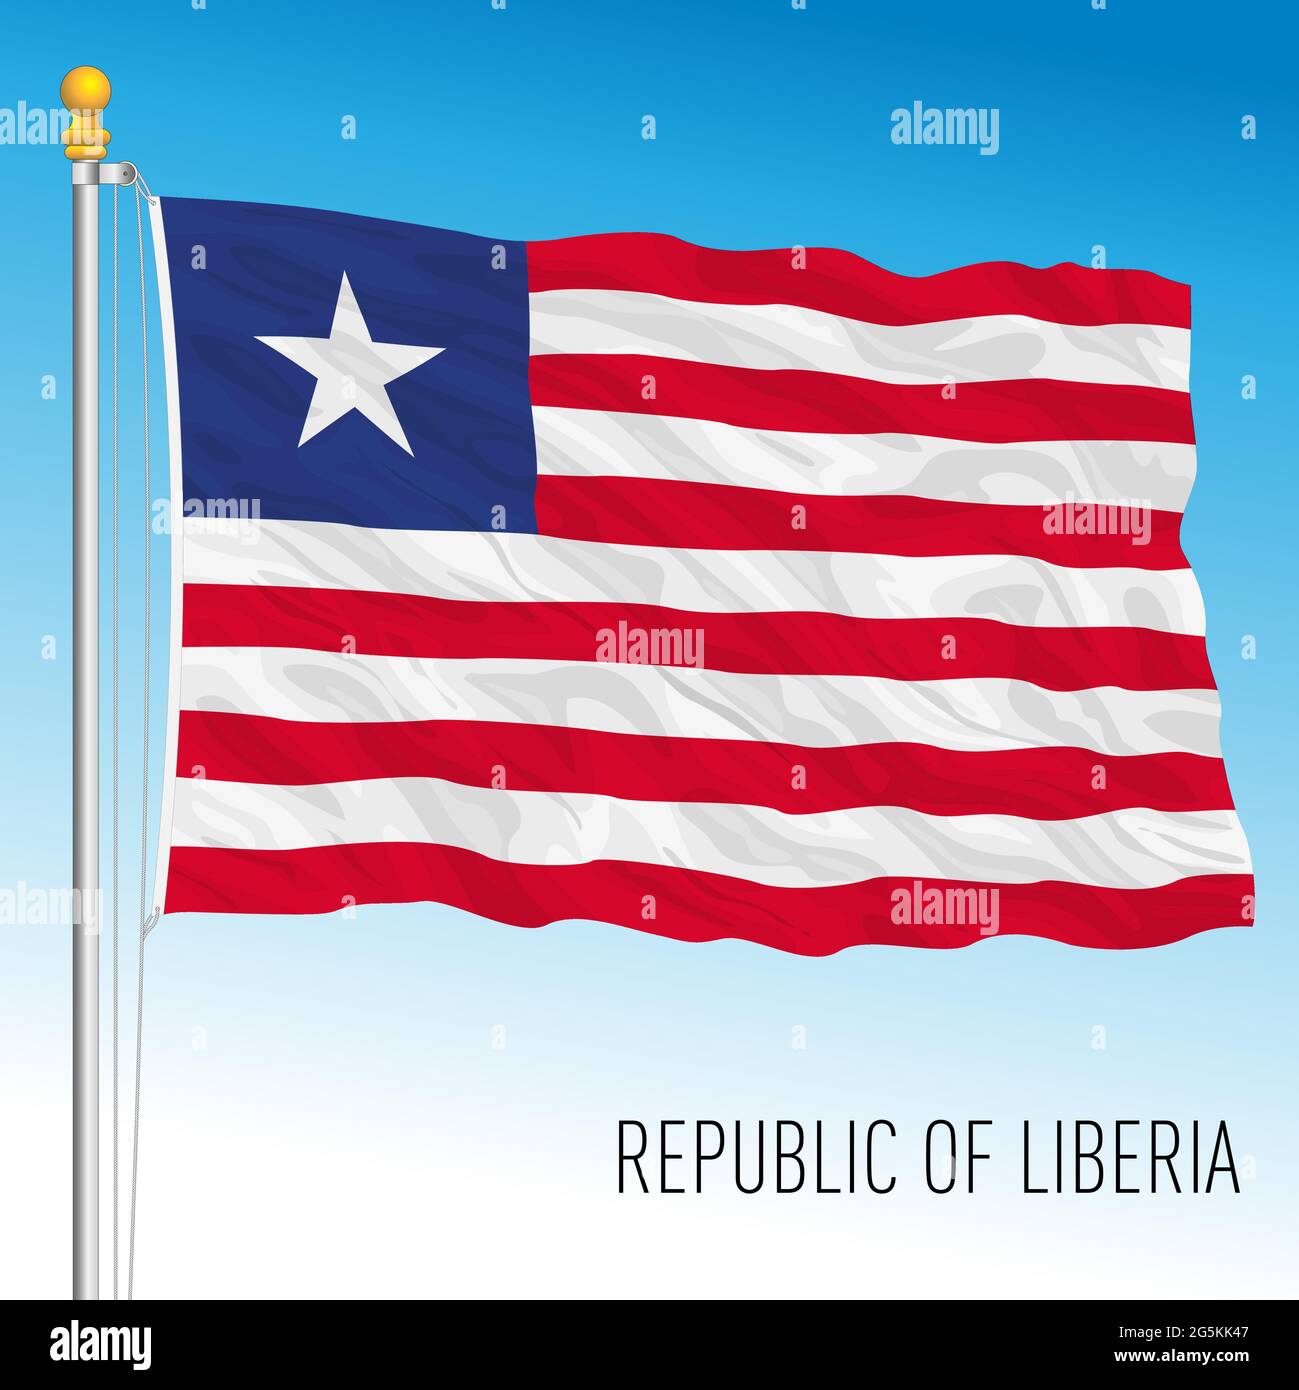 Liberia offizielle Nationalflagge, afrikanisches Land, Vektorgrafik Stock Vektor